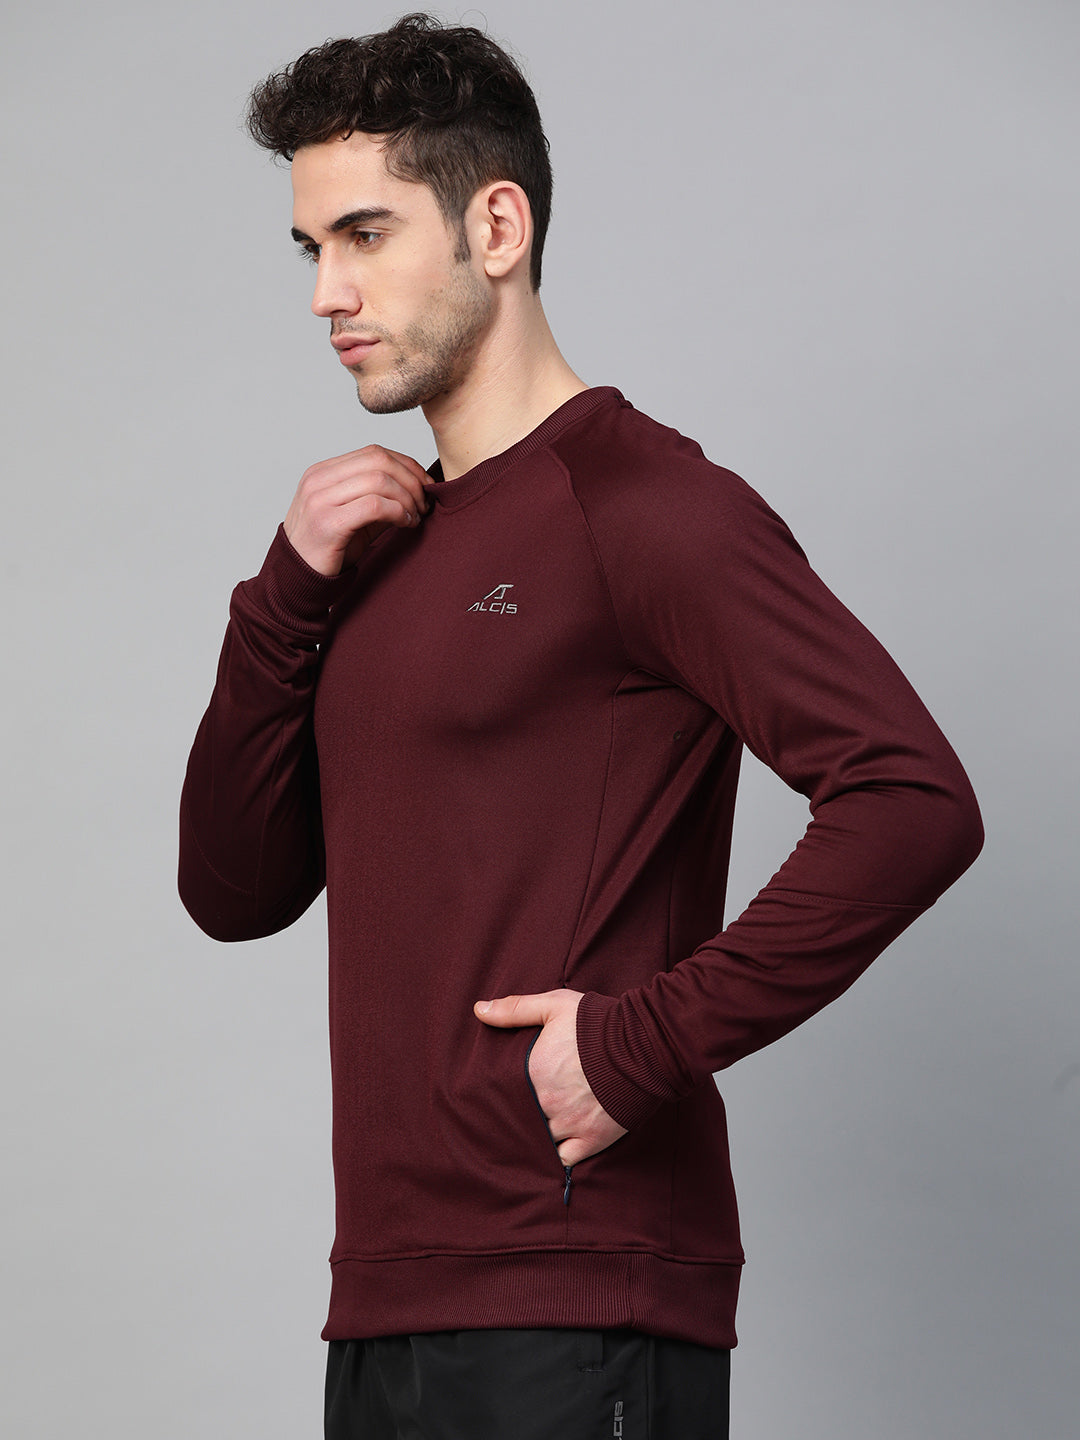 Alcis Men Burgundy Solid Training Sweatshirt with Printed Detail